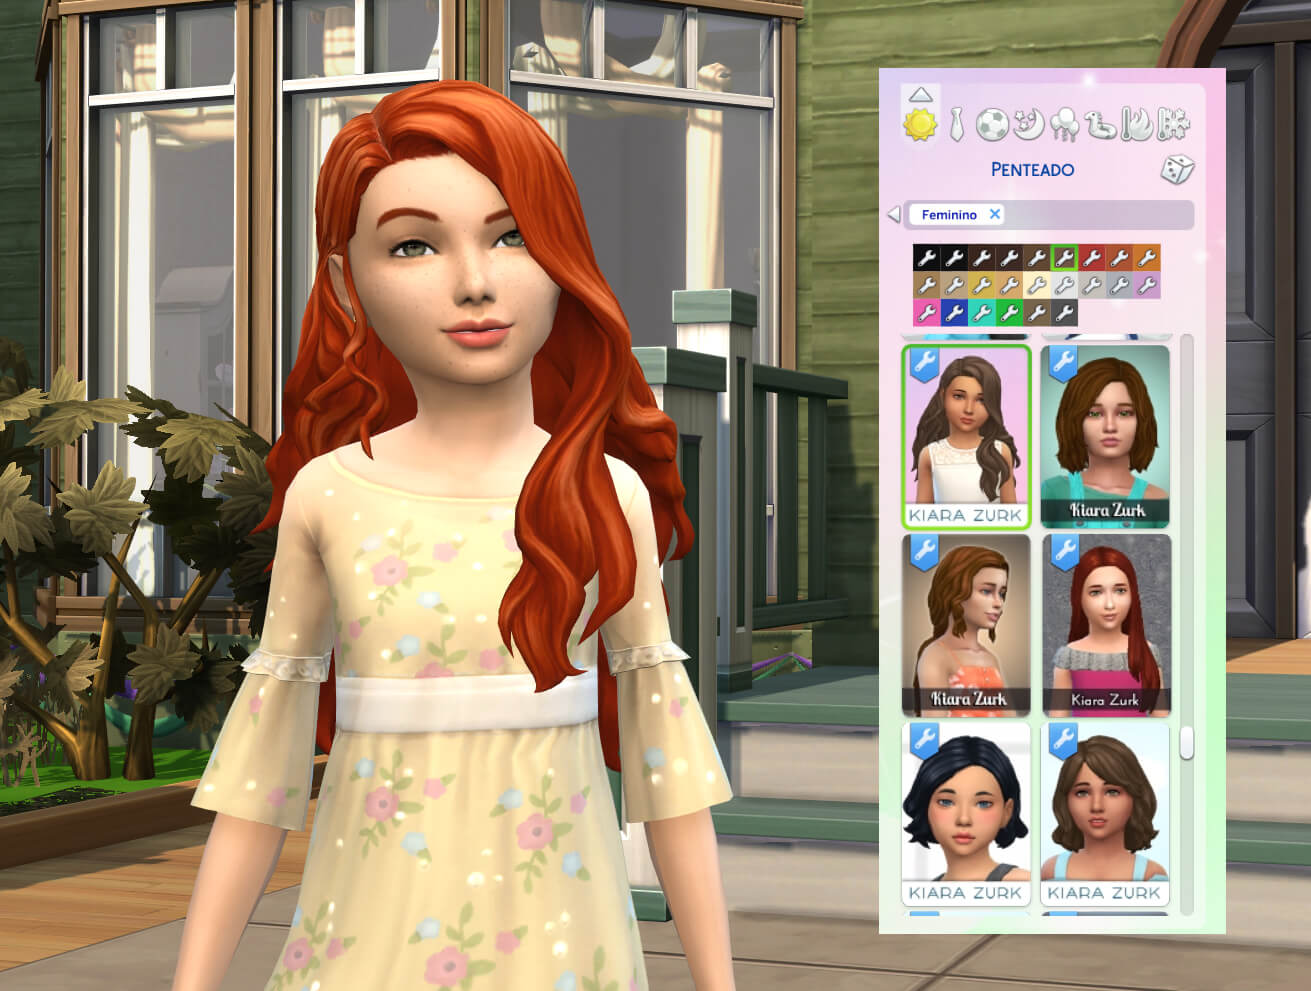 Chloe Hairstyle for Girls - The Sims 4 Create a Sim - CurseForge